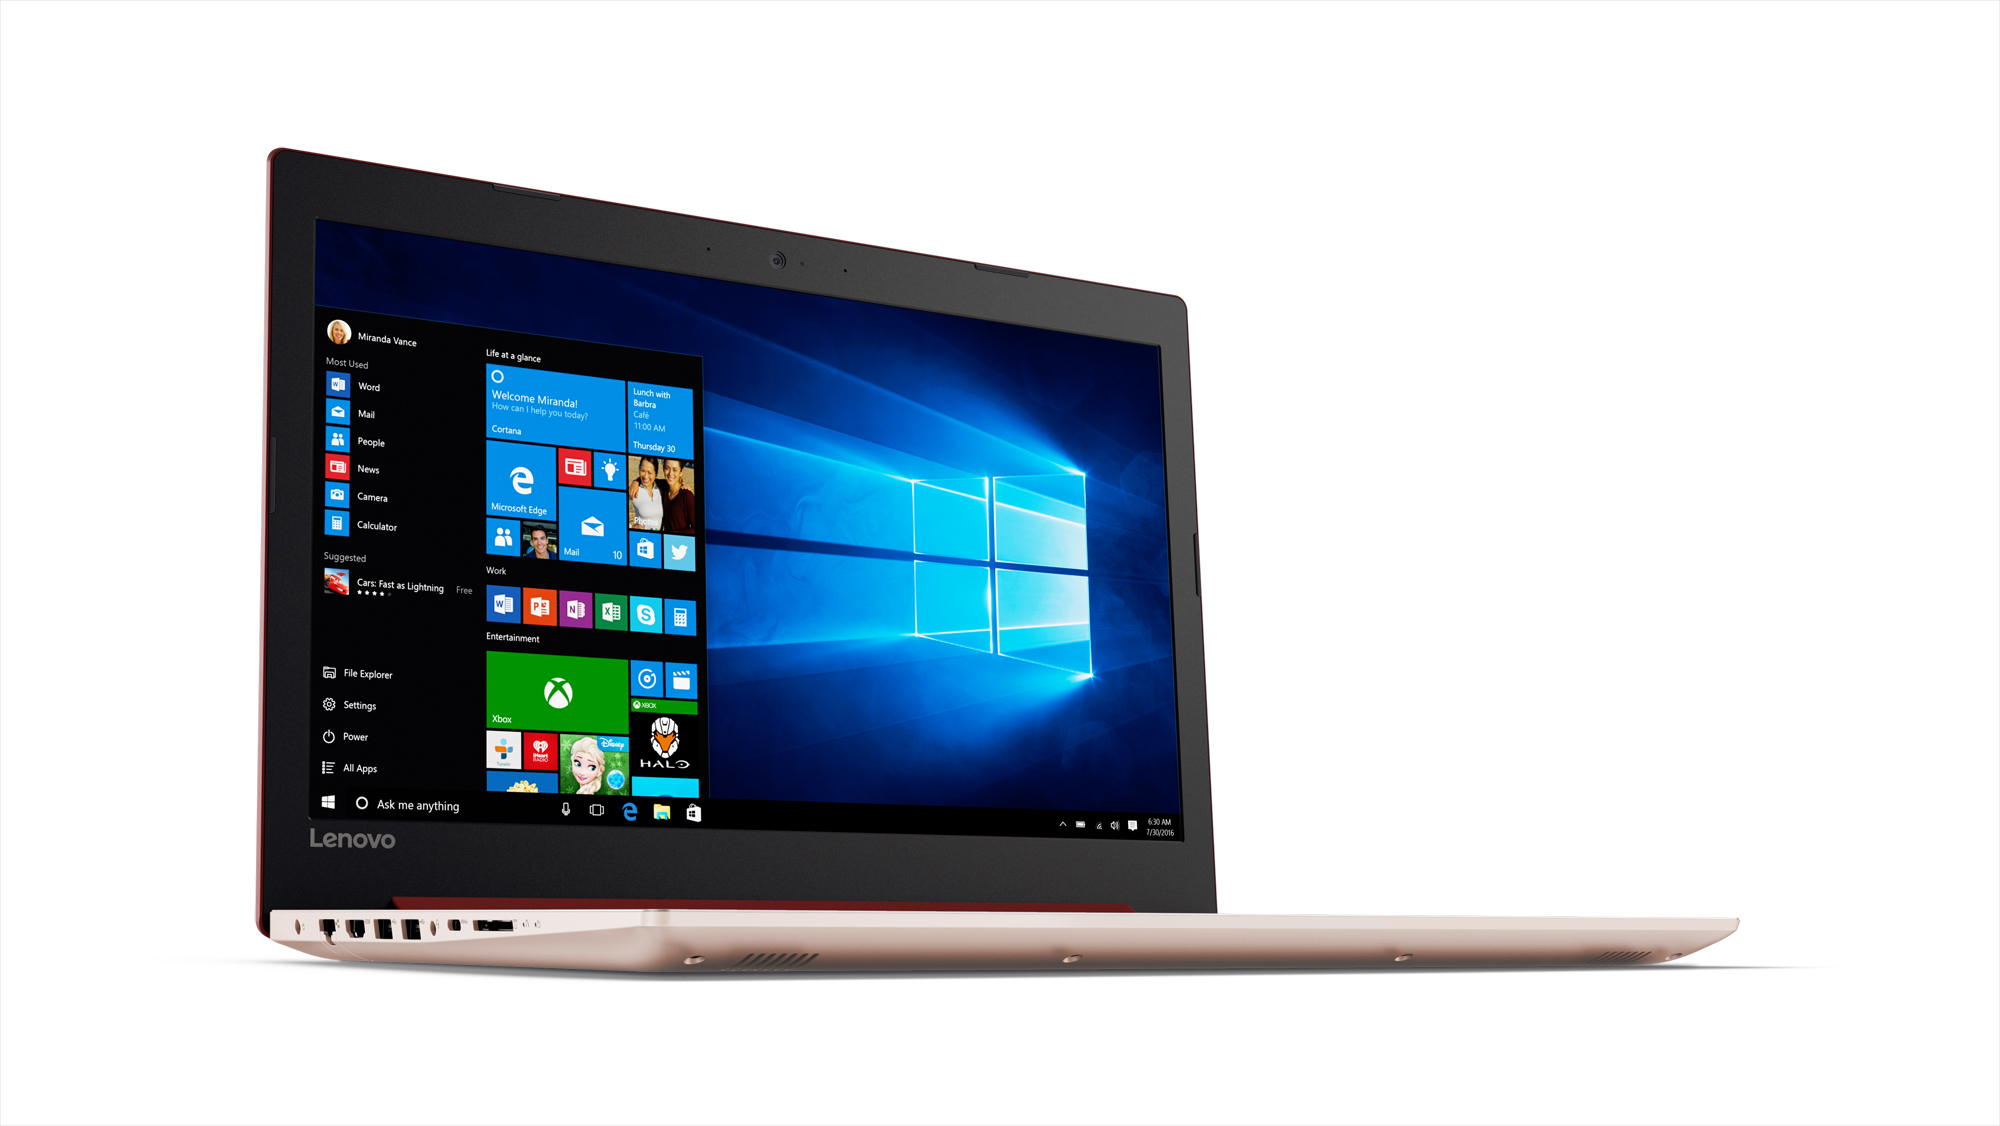 Lenovo 81DE00T0US ideapad 330 15.6" Laptop, Intel Core i3-8130U, 4GB RAM, 1TB HDD, Win 10, Coral Red - image 4 of 6